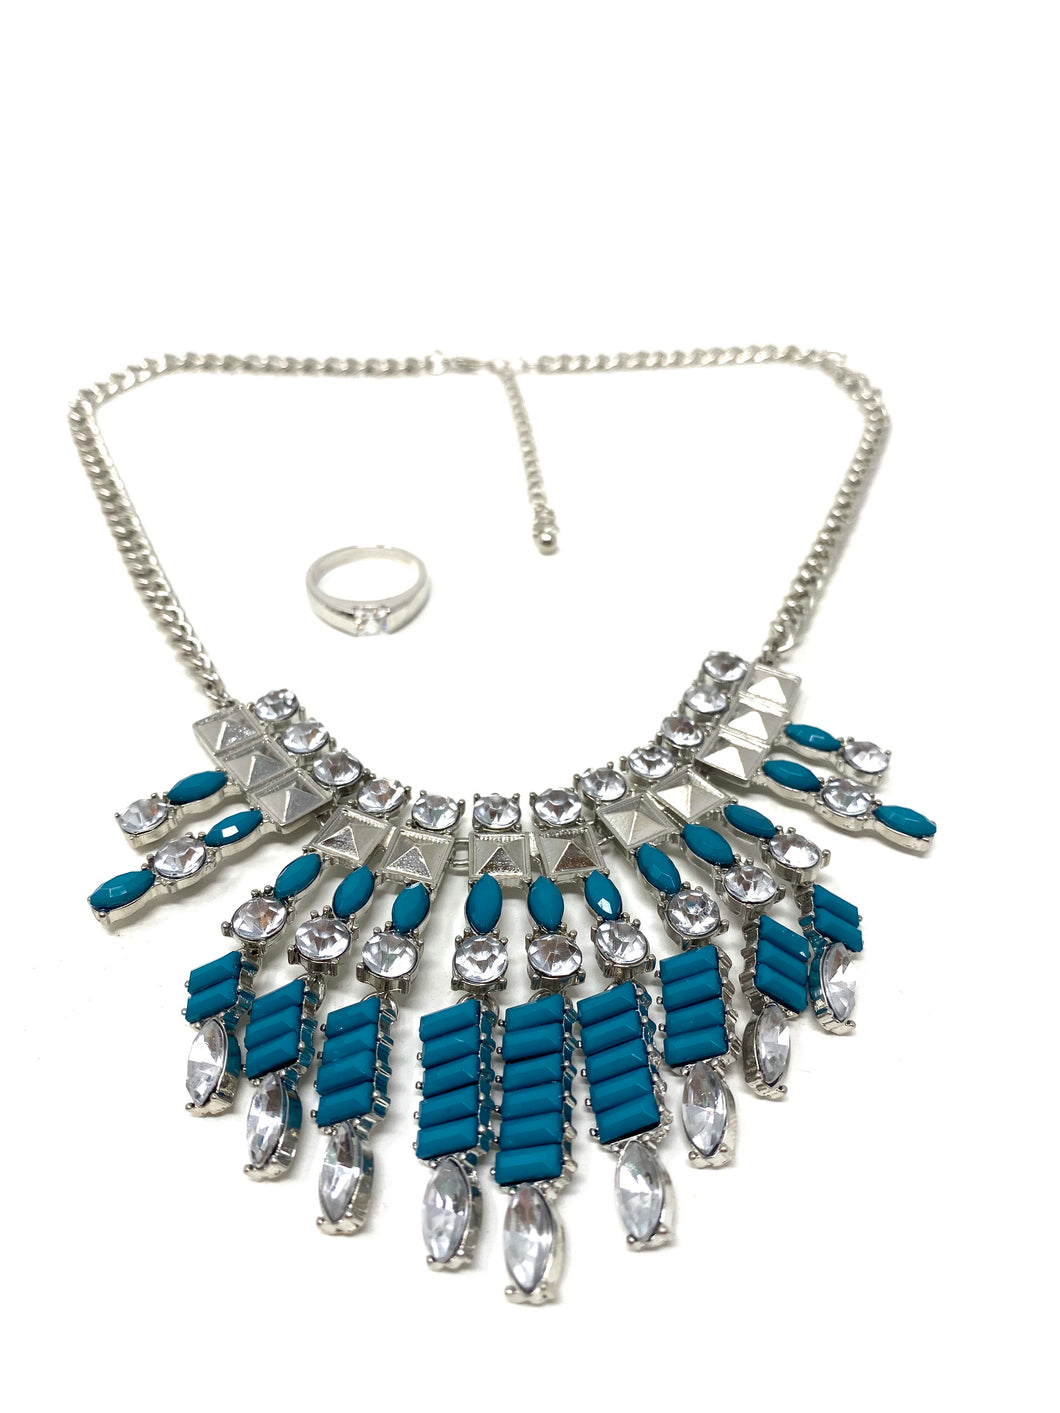 Aquamarine Art Deco Necklace and Ring Set